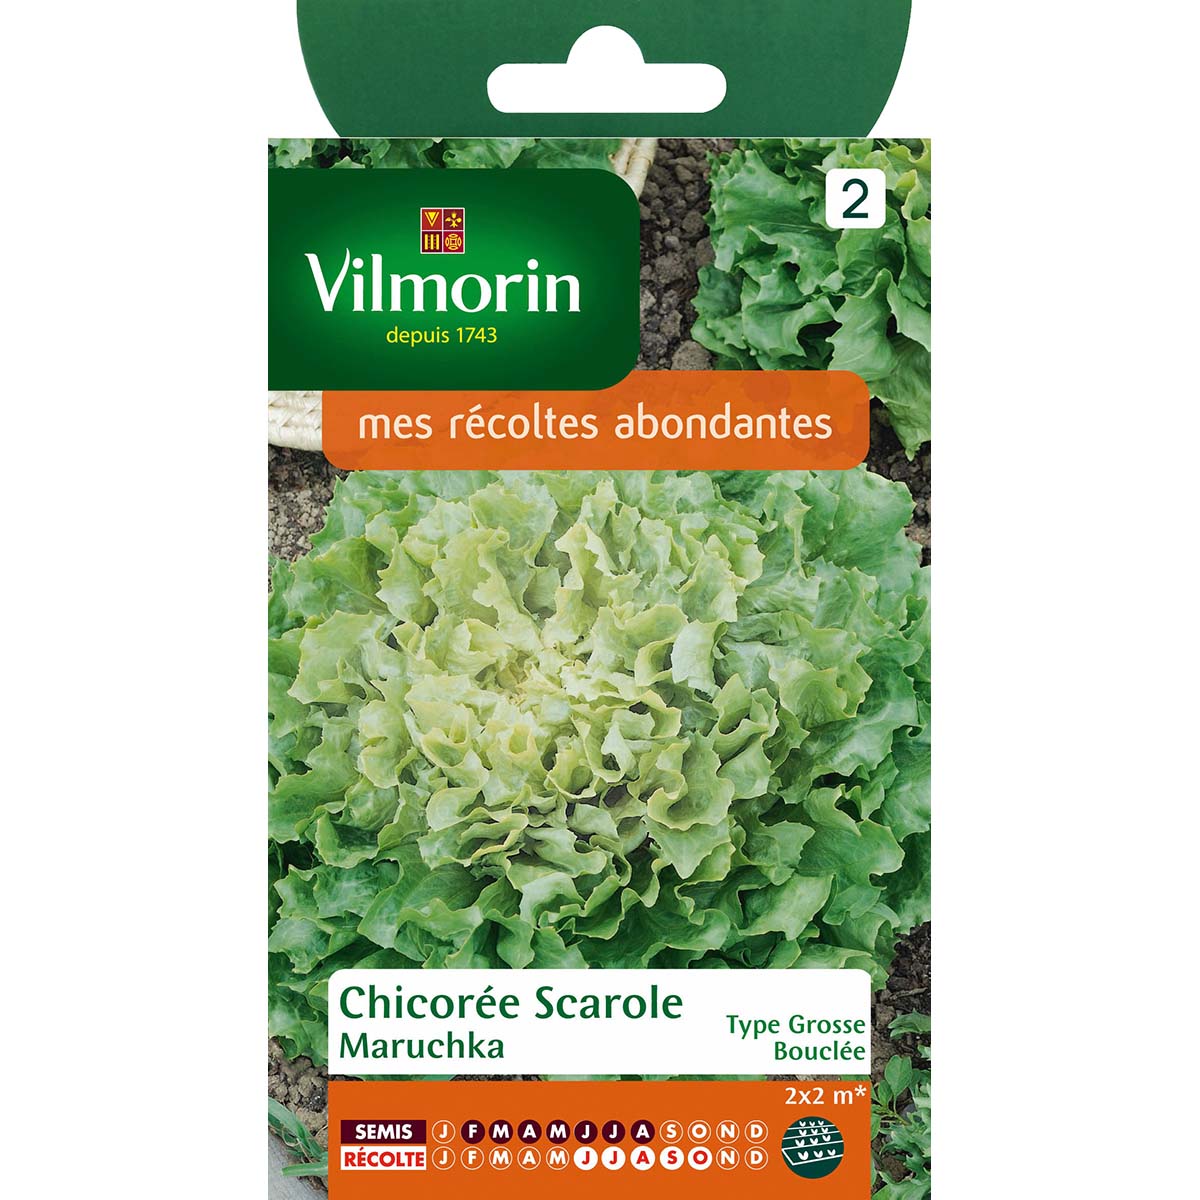 Chicorée scarole Maruschka (remplace Catalane) - Vilmorin